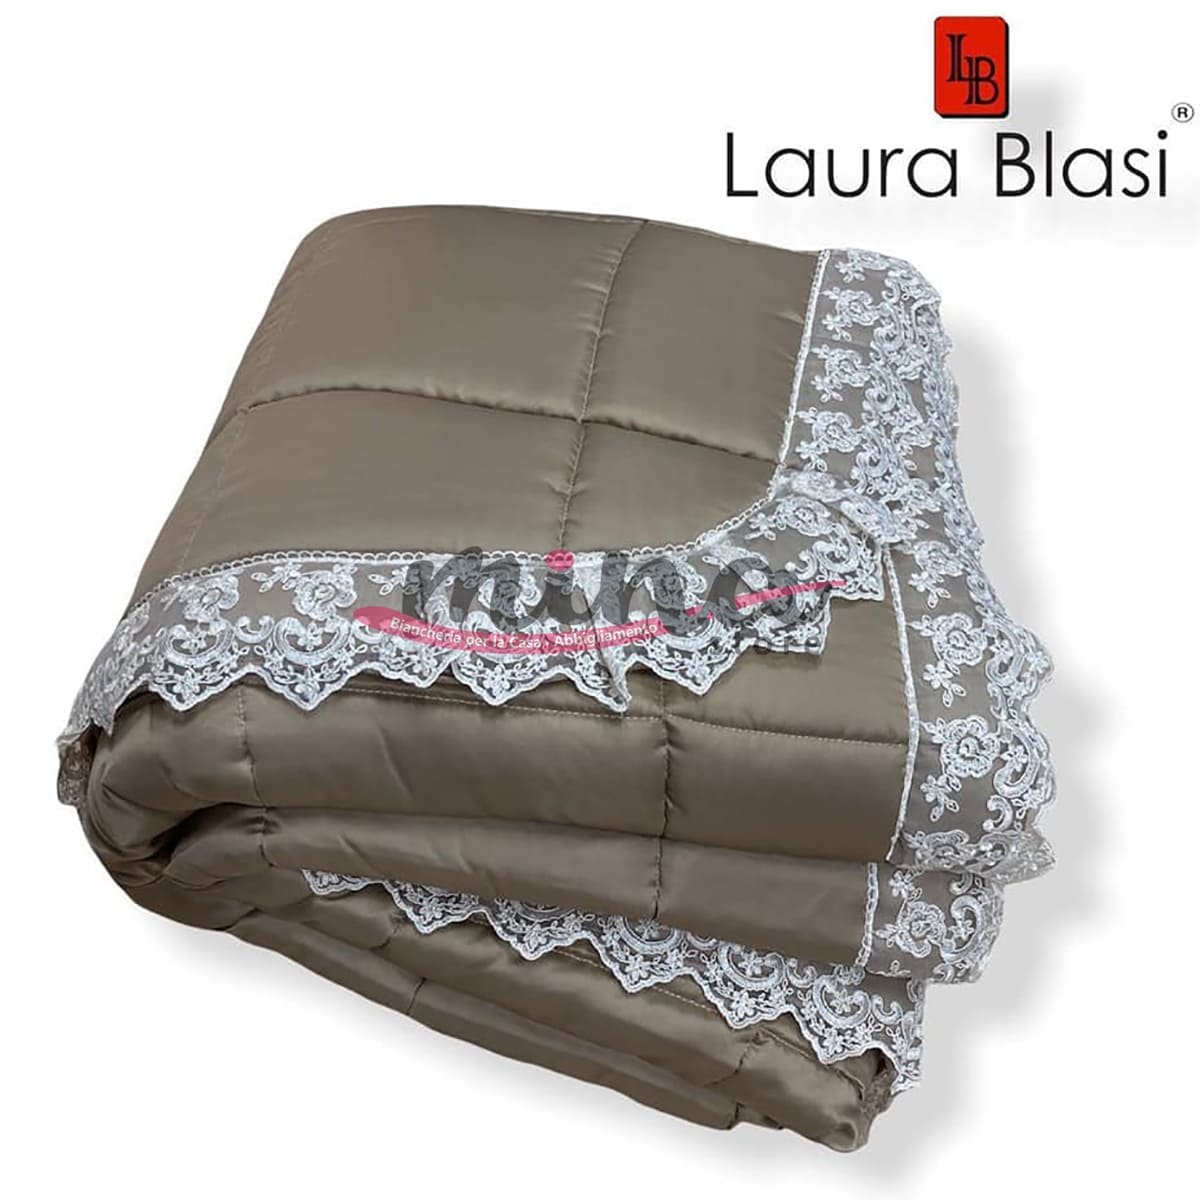 Trapunta invernale Matrimoniale Laura Blasi modello LOVE TORTORA 100% Made in Italy Qualità Premium 0917